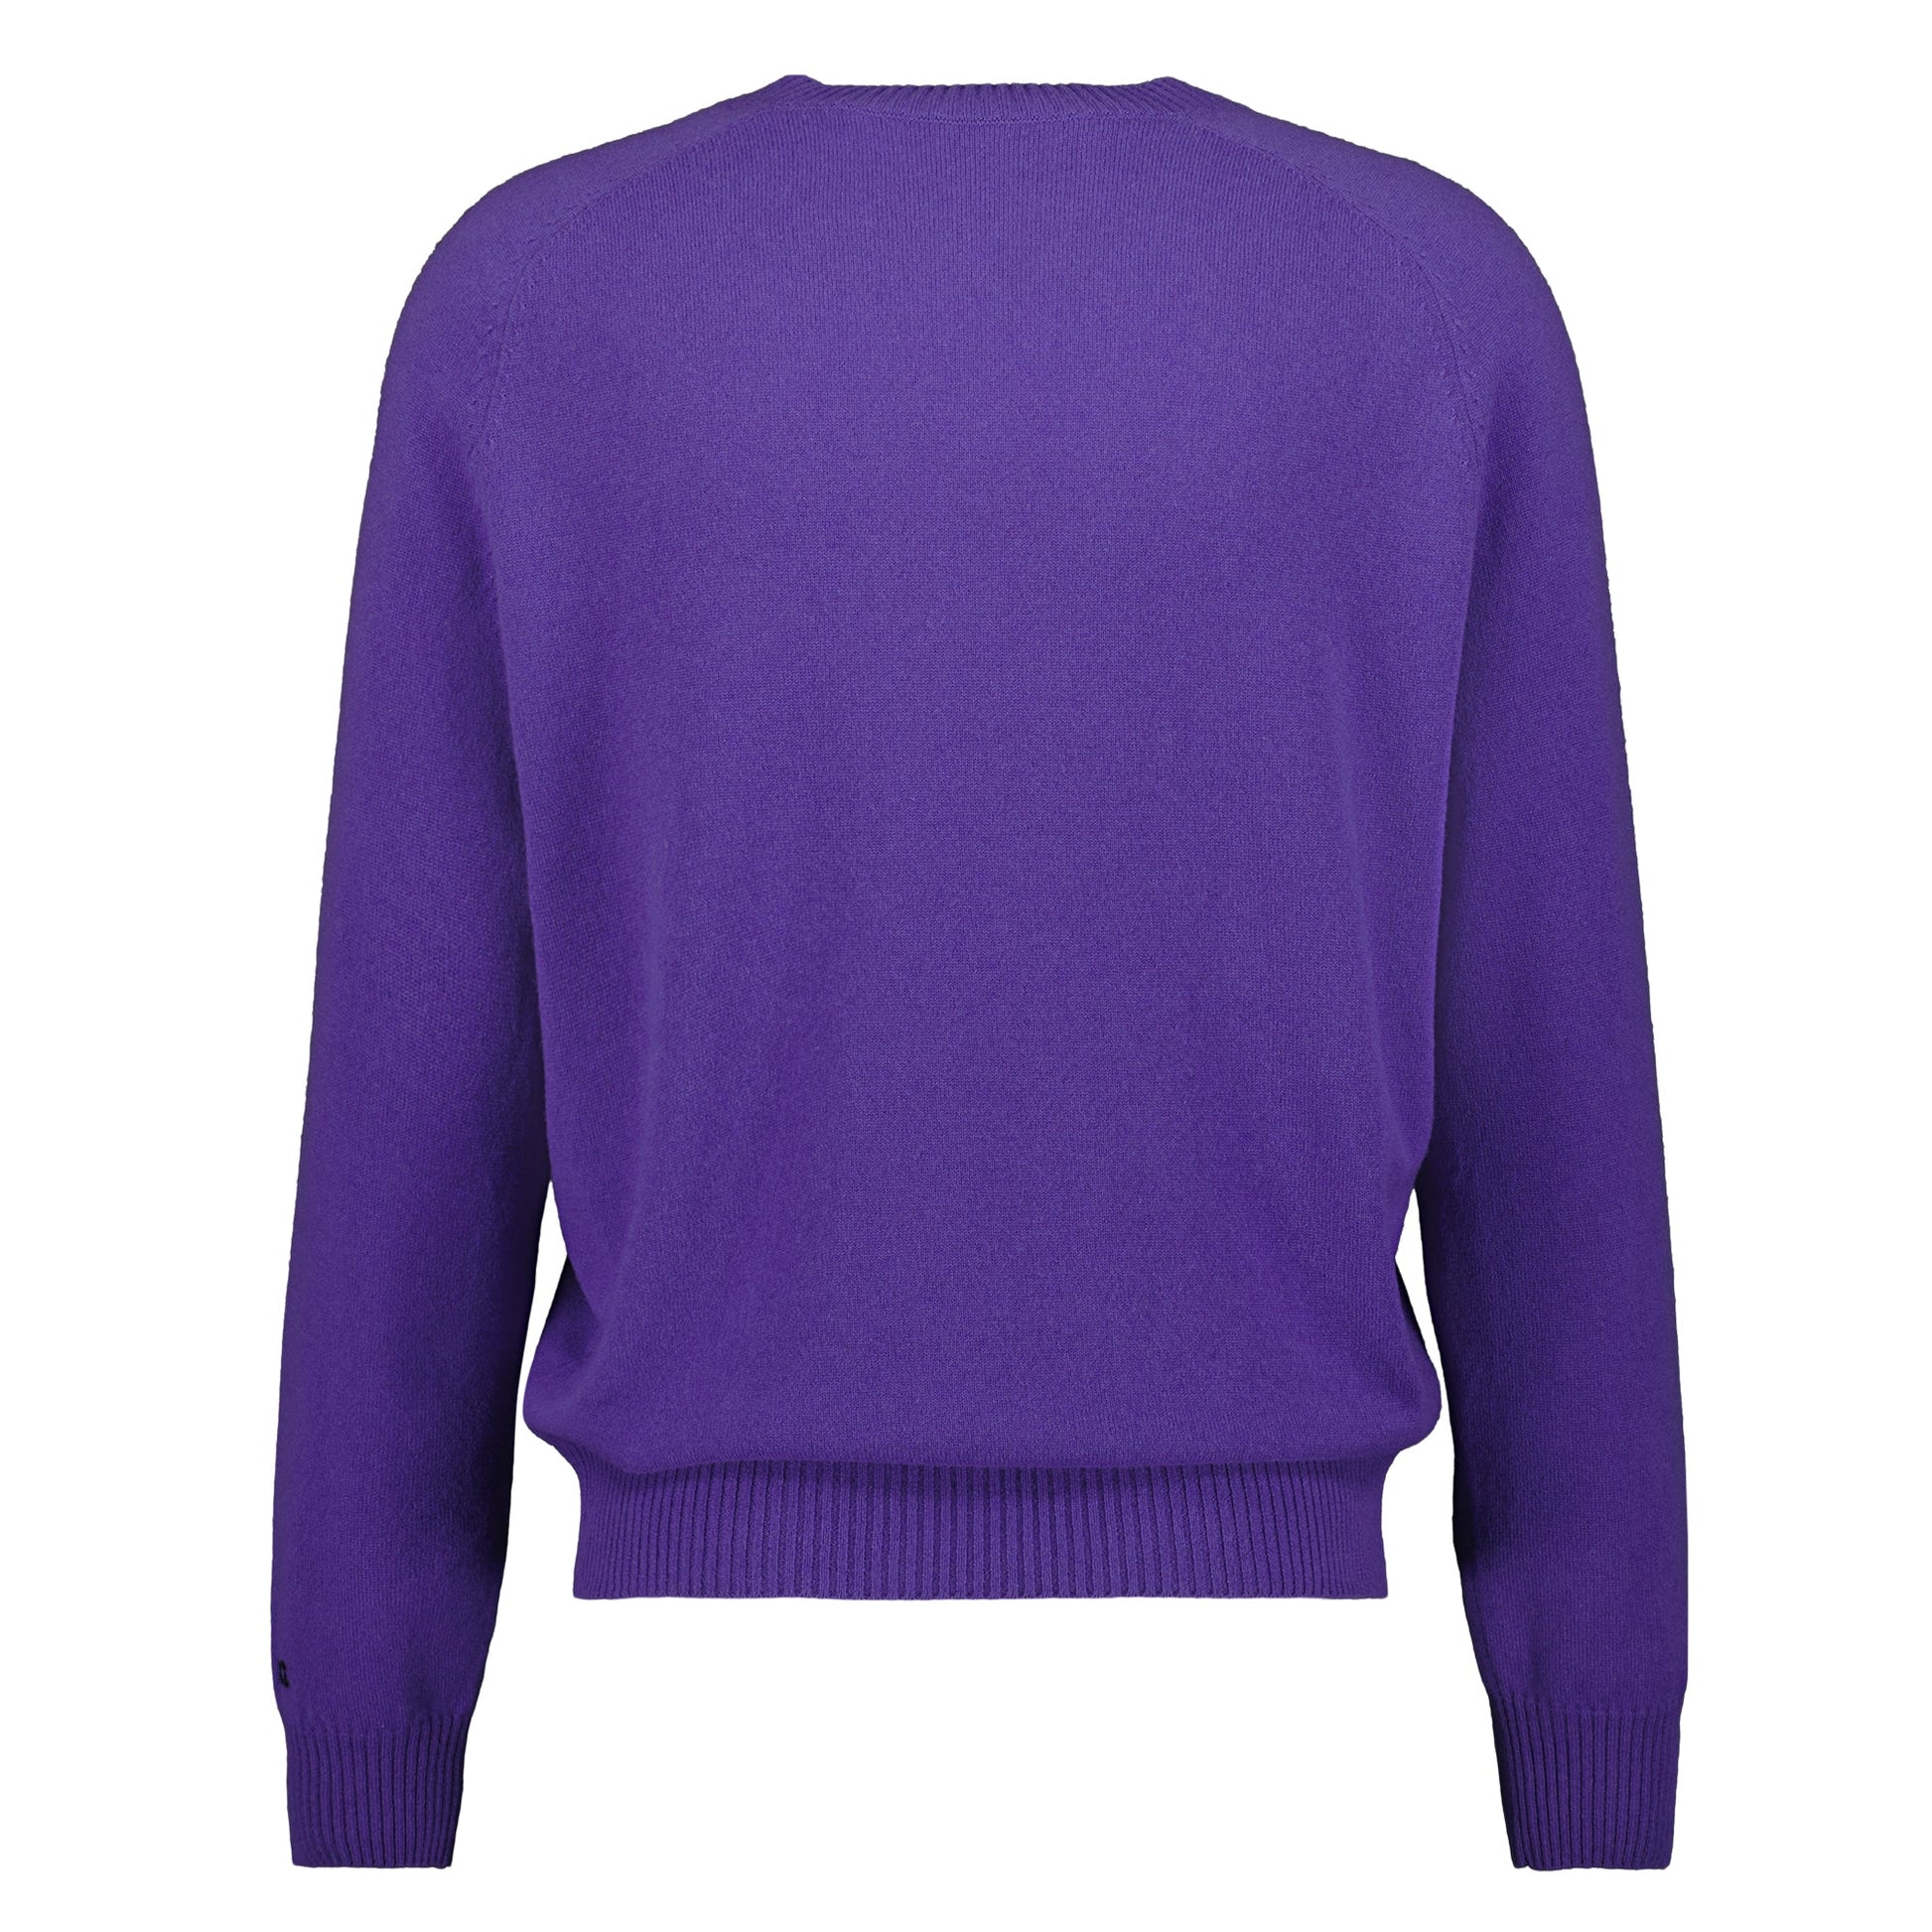 Jack Crew Neck Cashmere Sweater Bright Collective Meta – Campania Purple